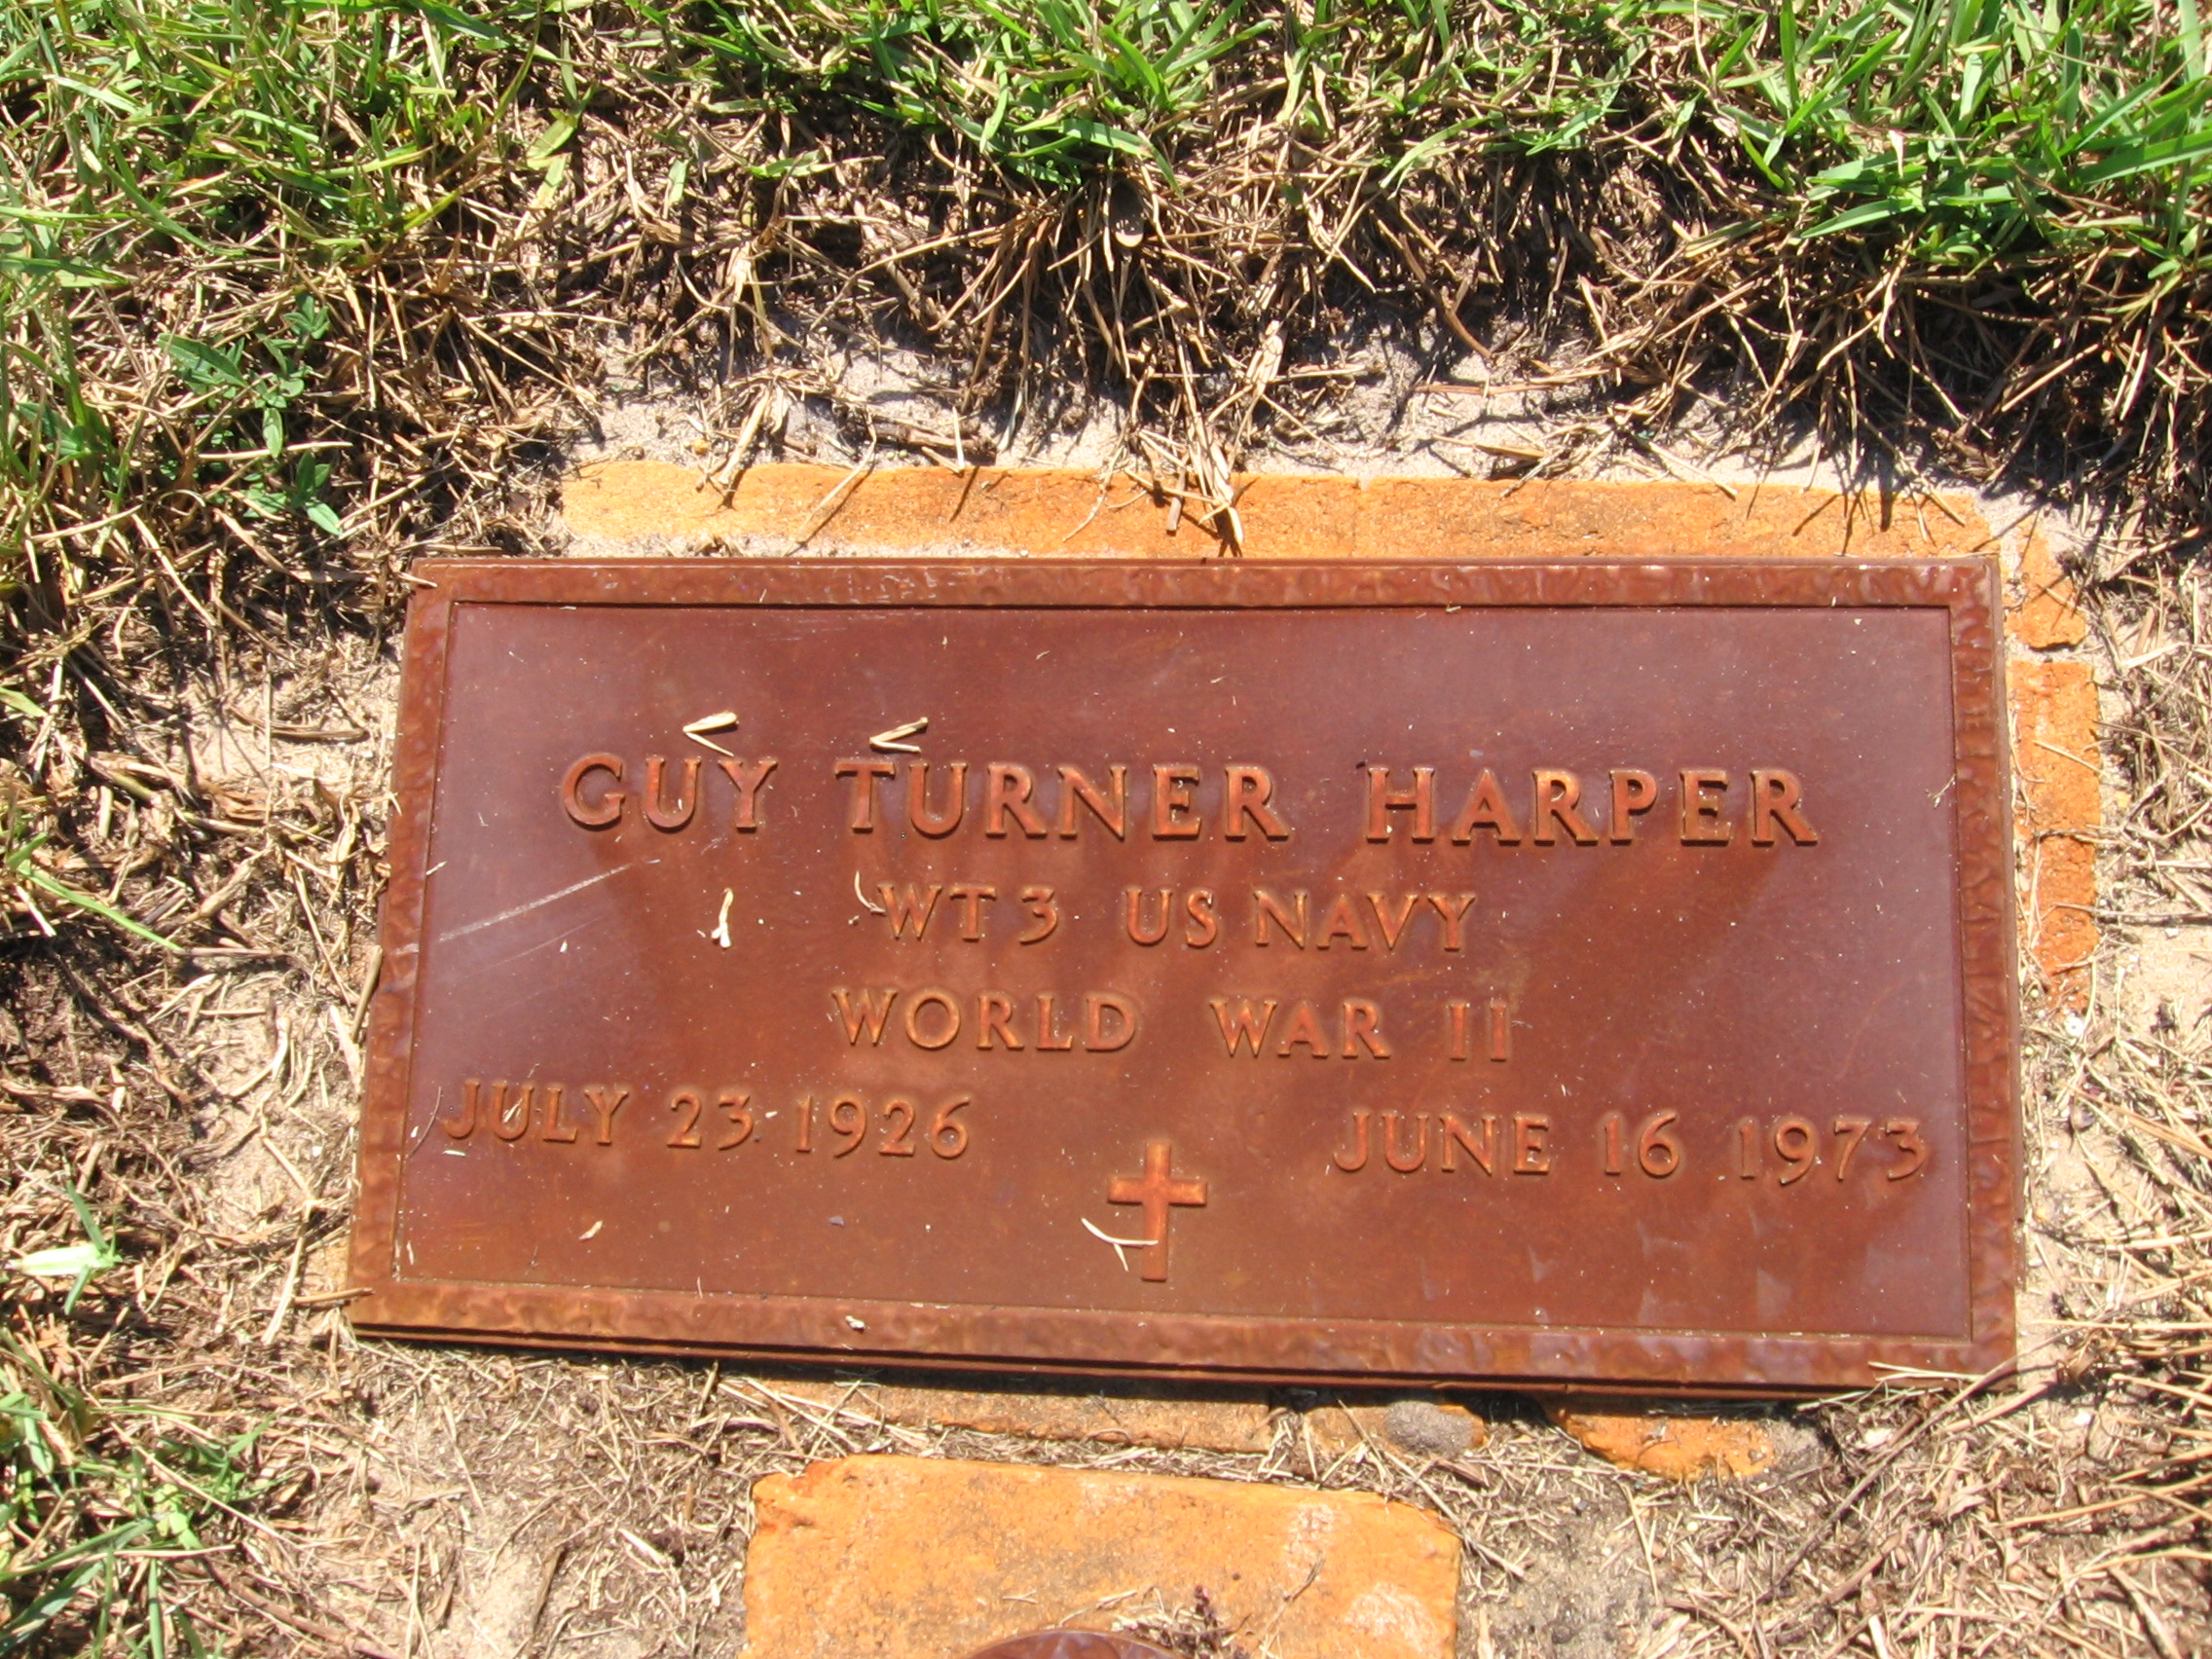 Guy Turner Harper